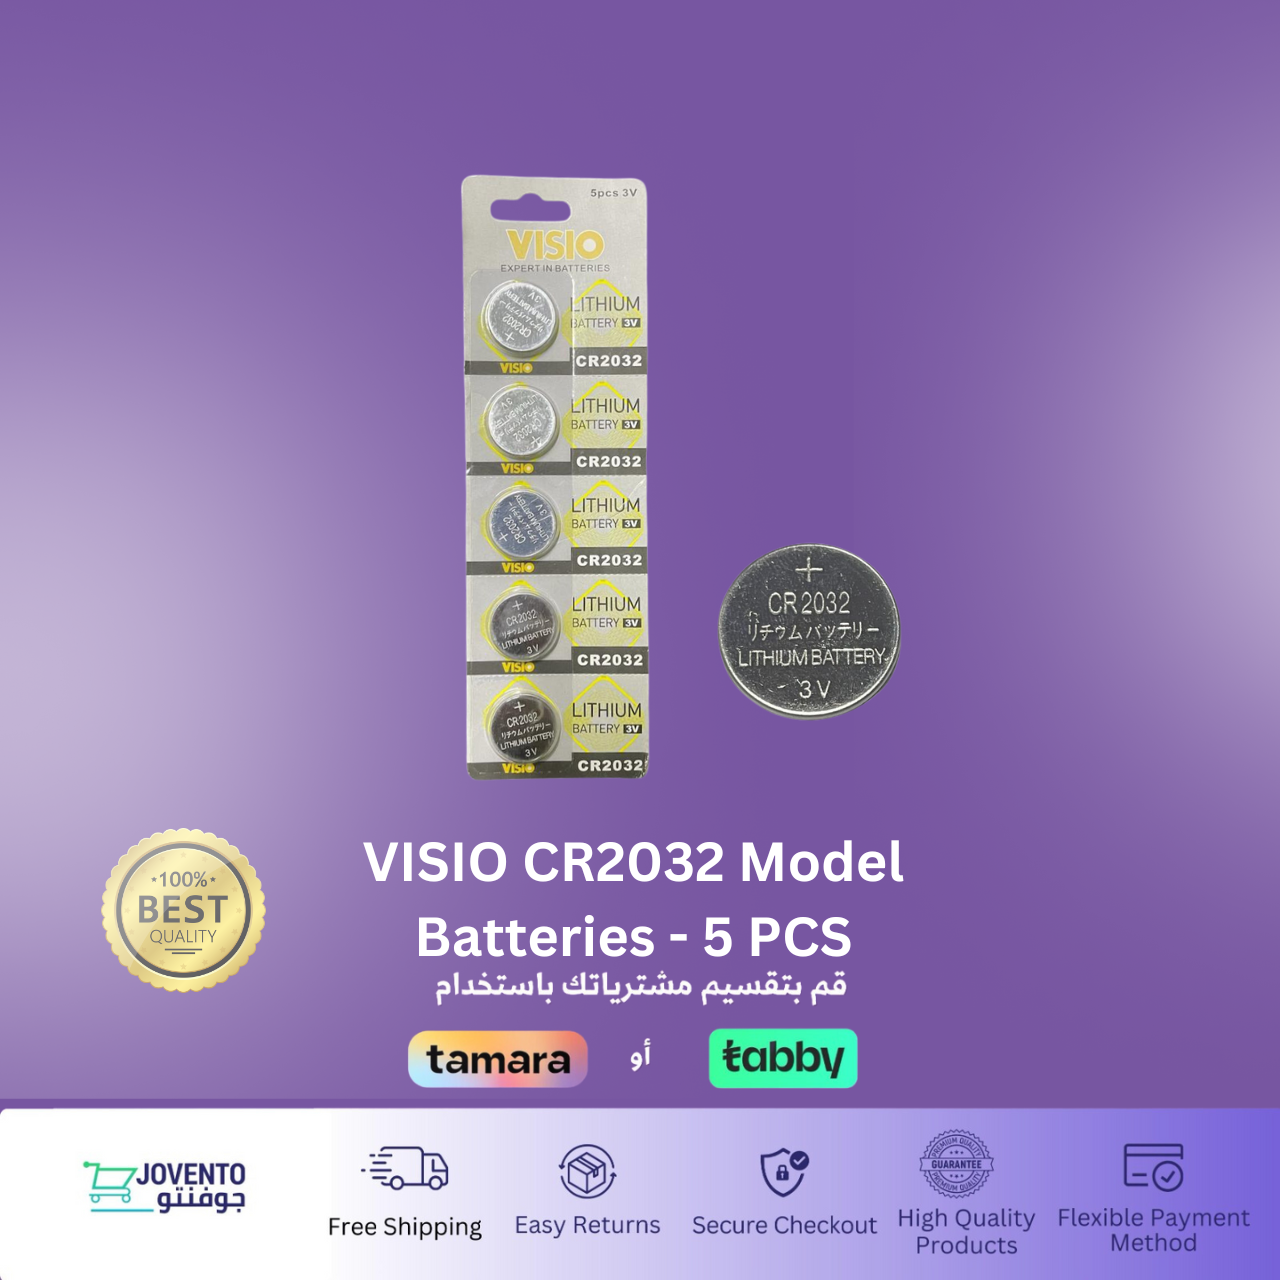 VISIO CR2032 Model Batteries - 5 PCS